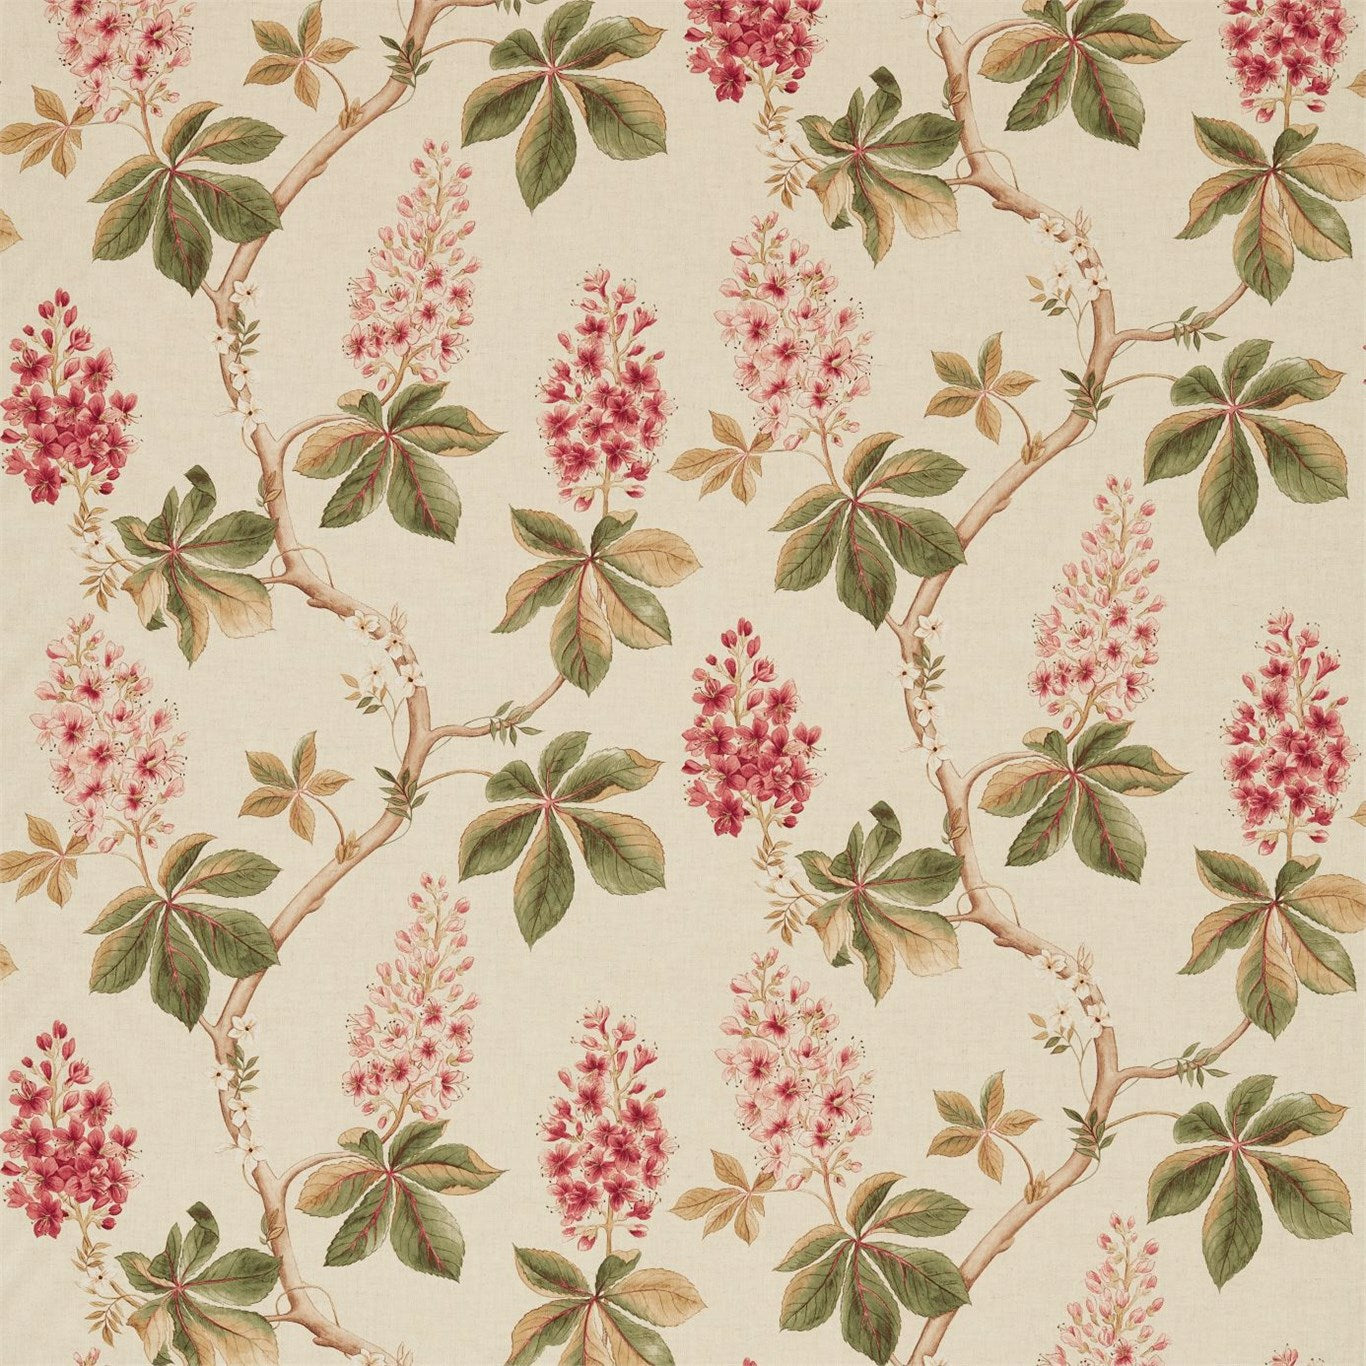 Chestnut Tree Fabric by Sanderson - DWOW225517 - Coral/Bayleaf